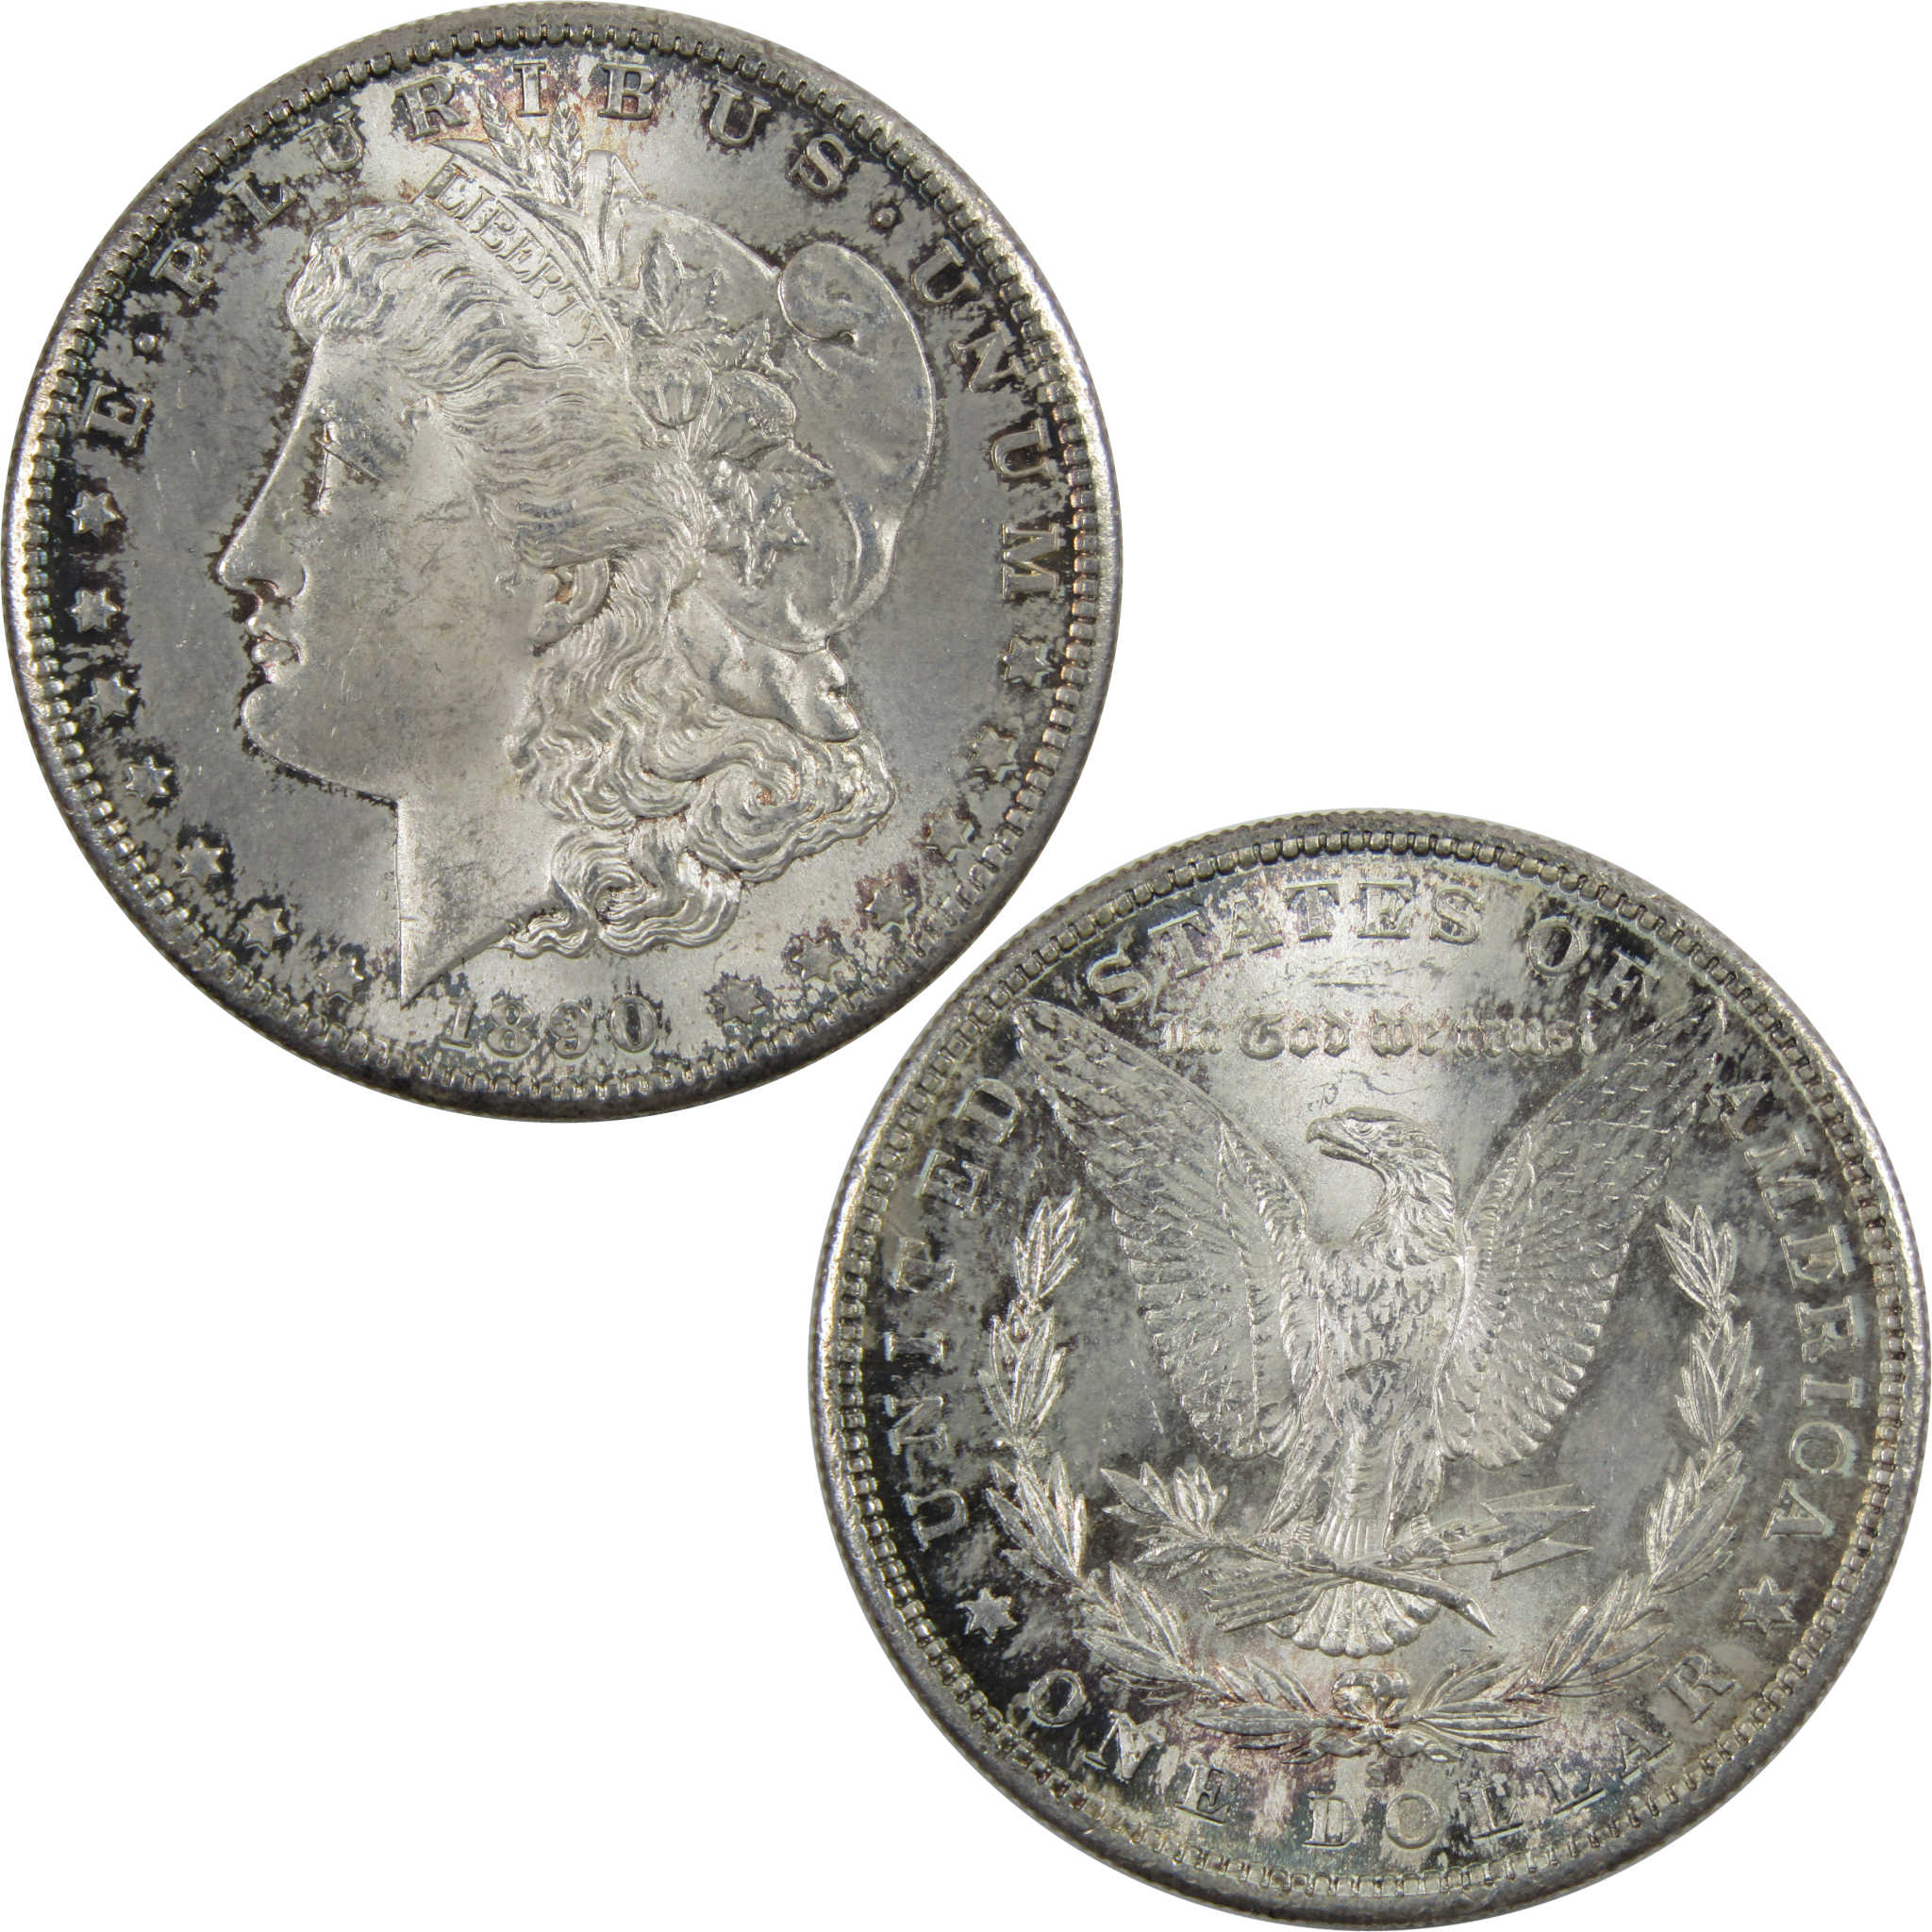 1890 S Morgan Dollar BU Uncirculated 90% Silver $1 Coin SKU:I5987 - Morgan coin - Morgan silver dollar - Morgan silver dollar for sale - Profile Coins &amp; Collectibles